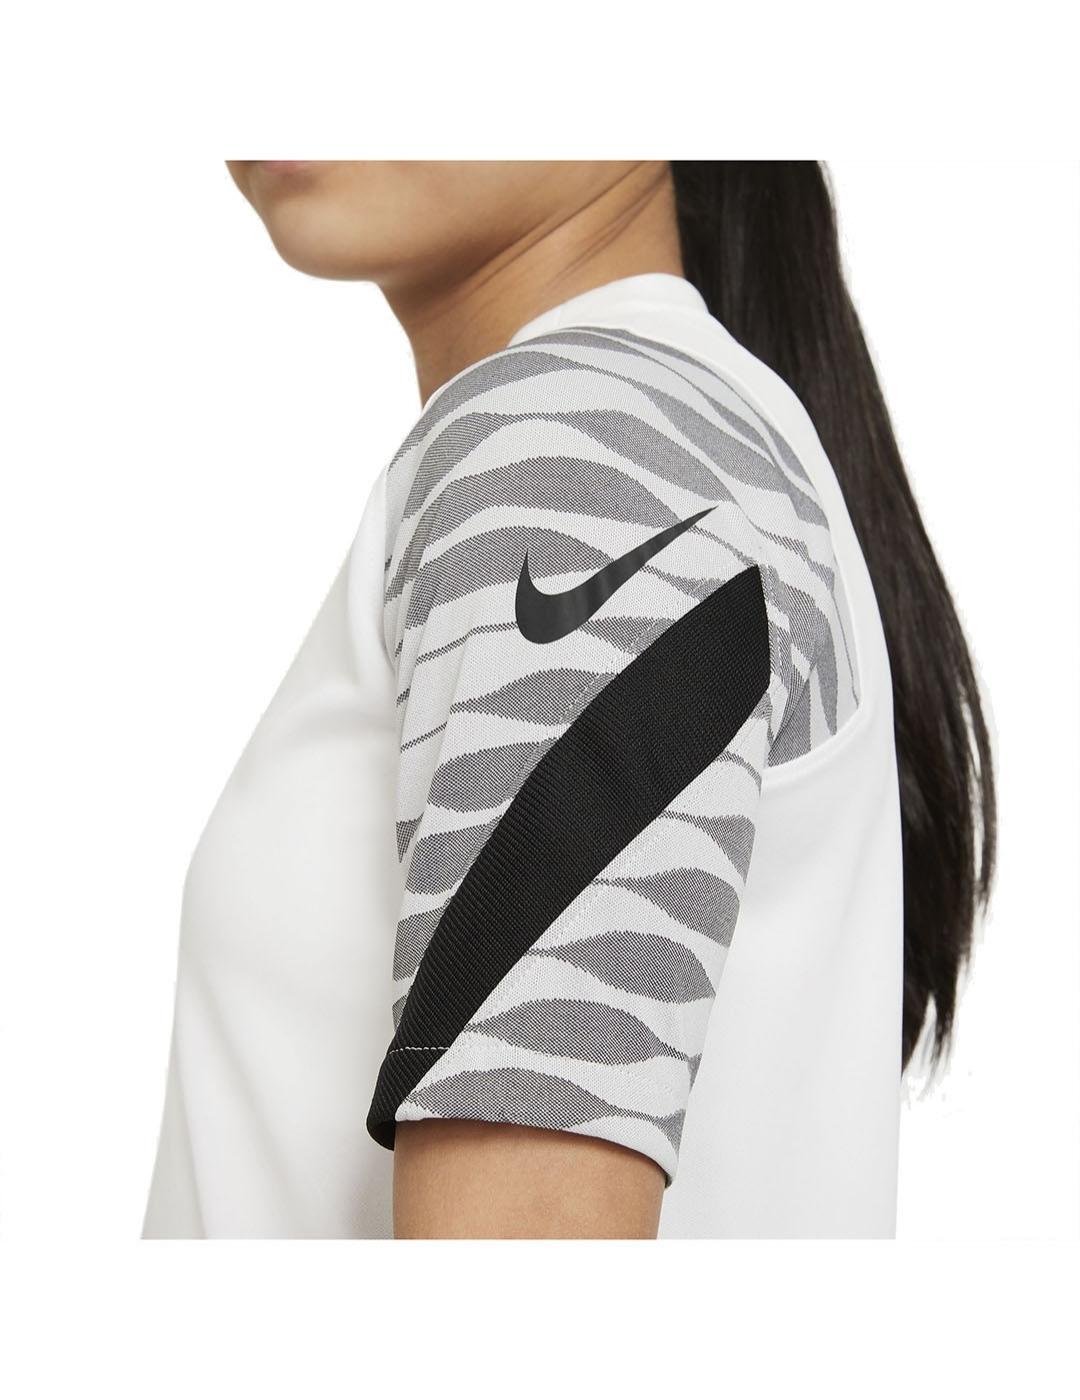 Camiseta Niño Nike Strike21 Blanco